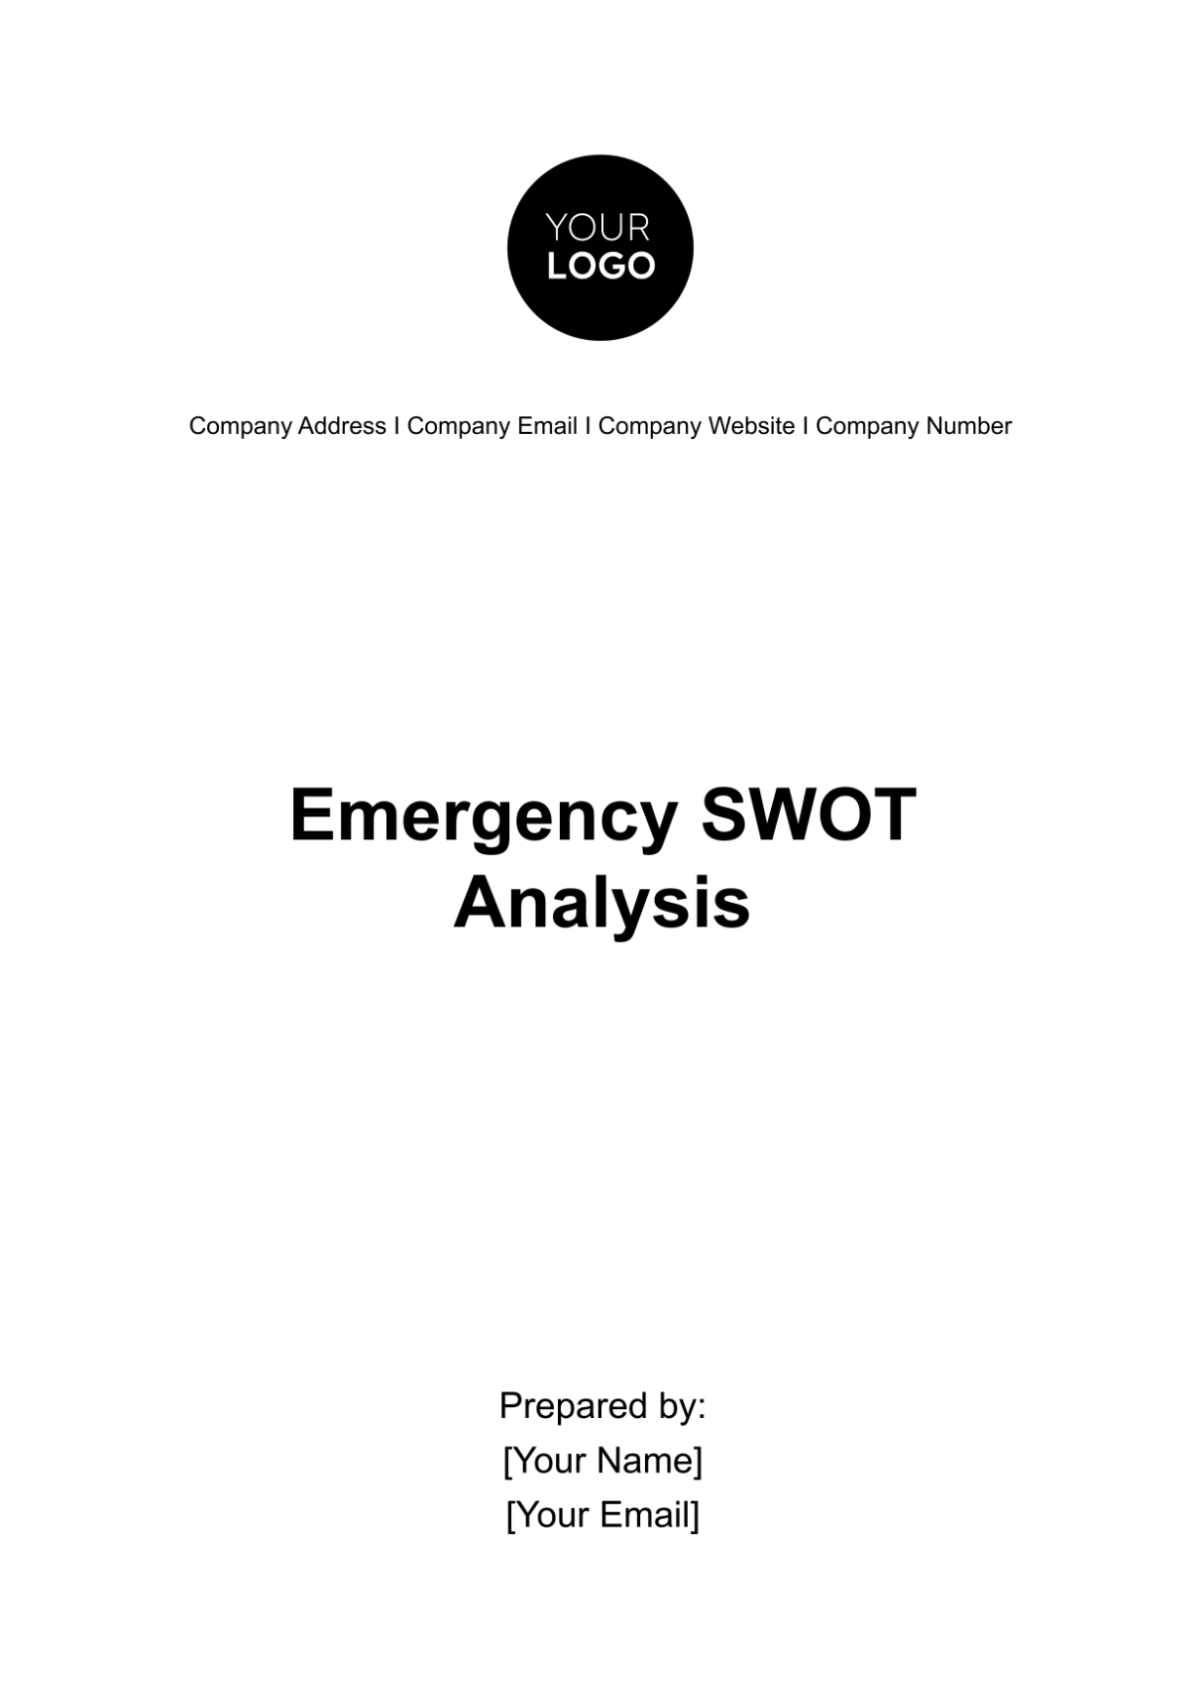 Emergency SWOT Analysis Template